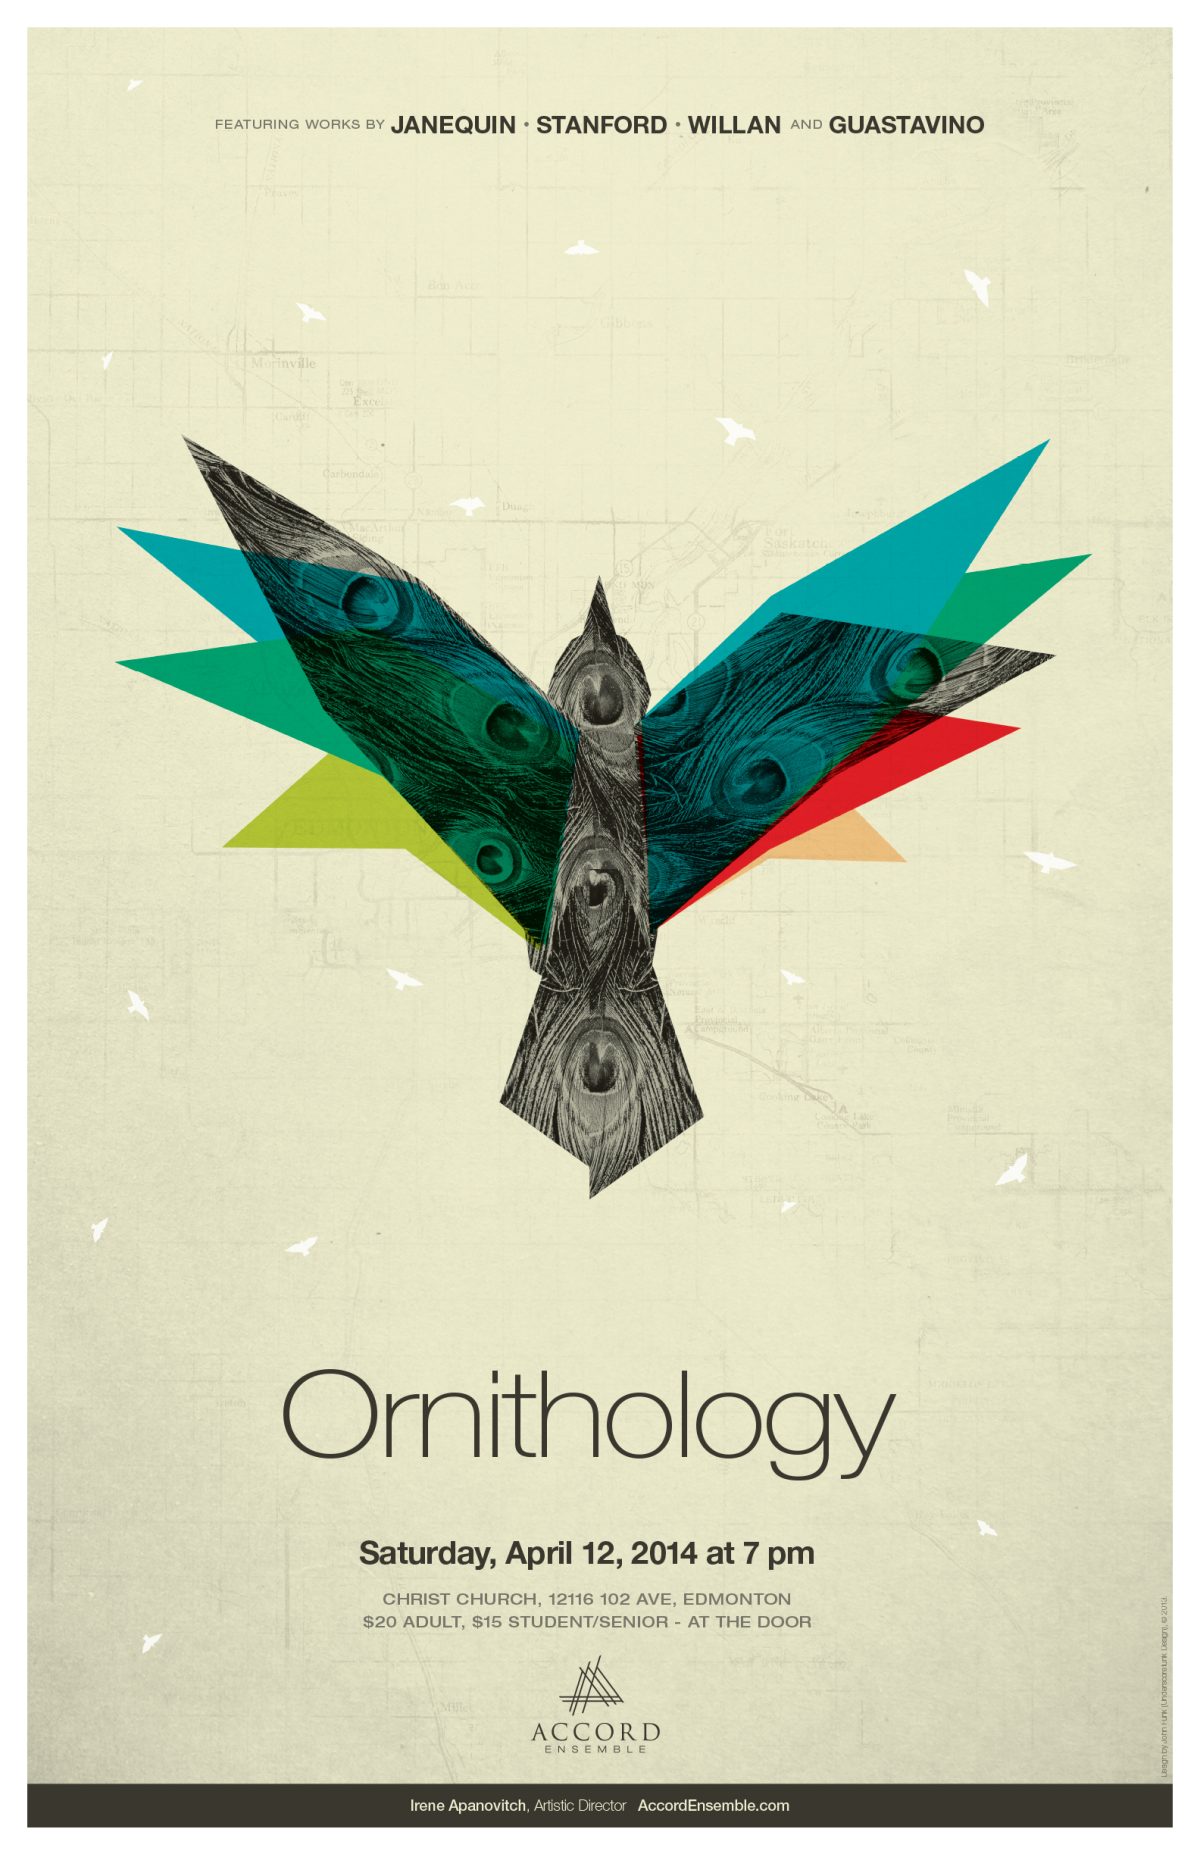 AEN_005_Ornithology_Poster.indd